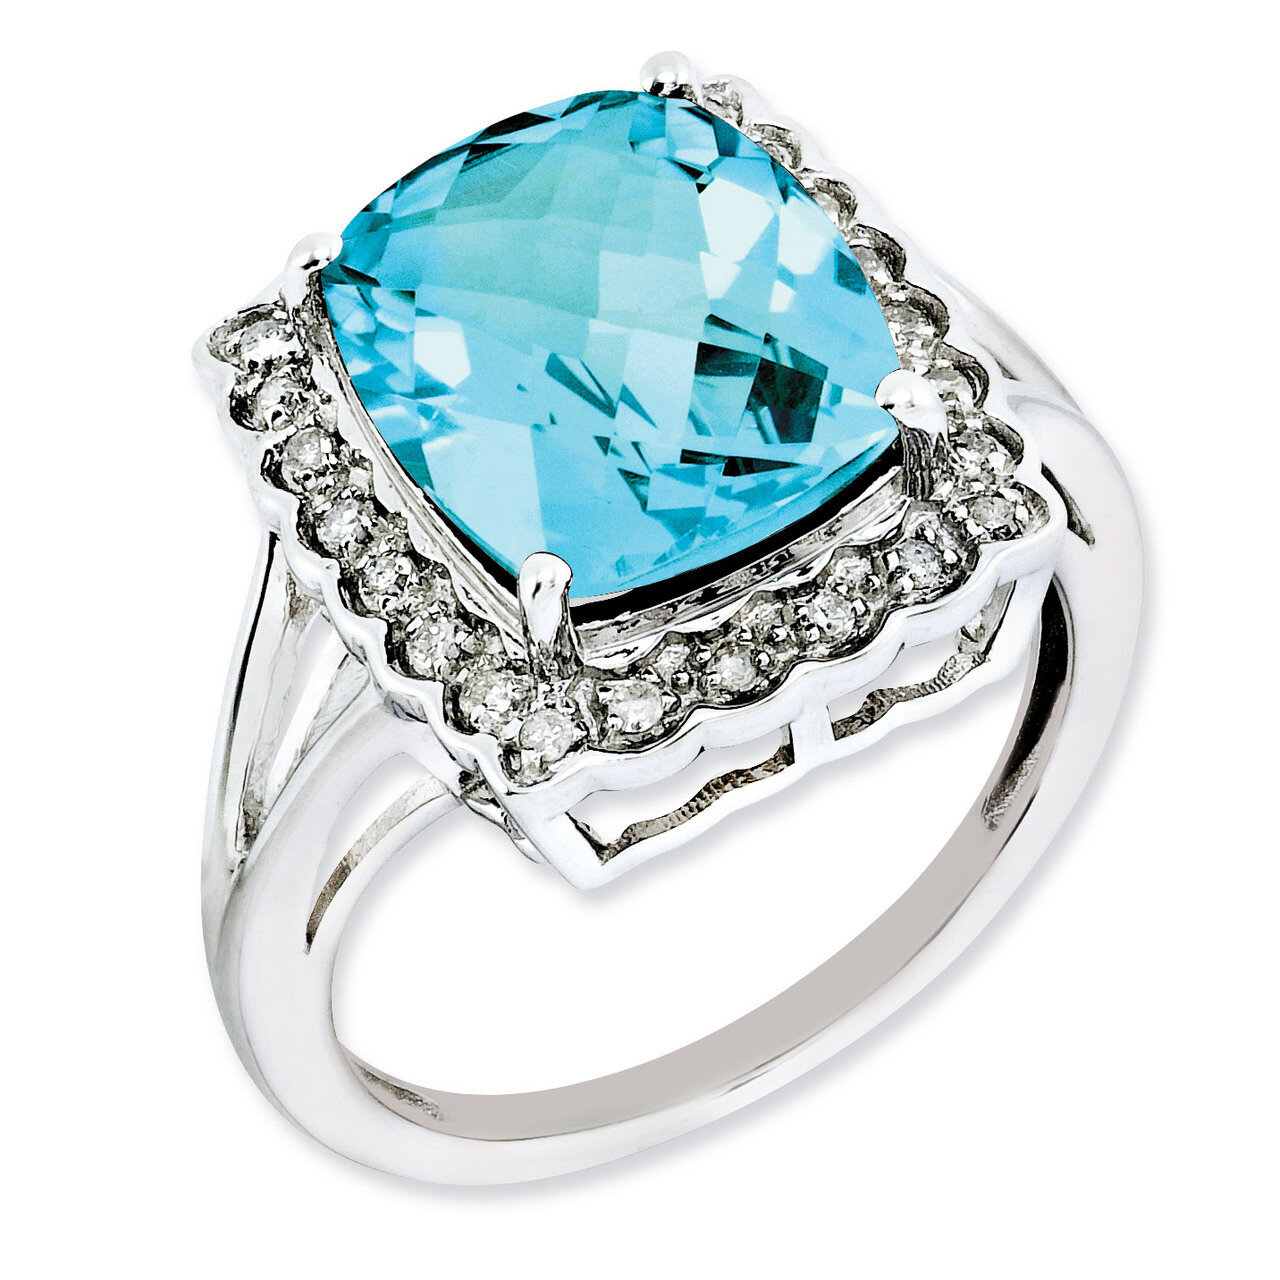 Blue Topaz Ring Sterling Silver Diamond QR3031BT